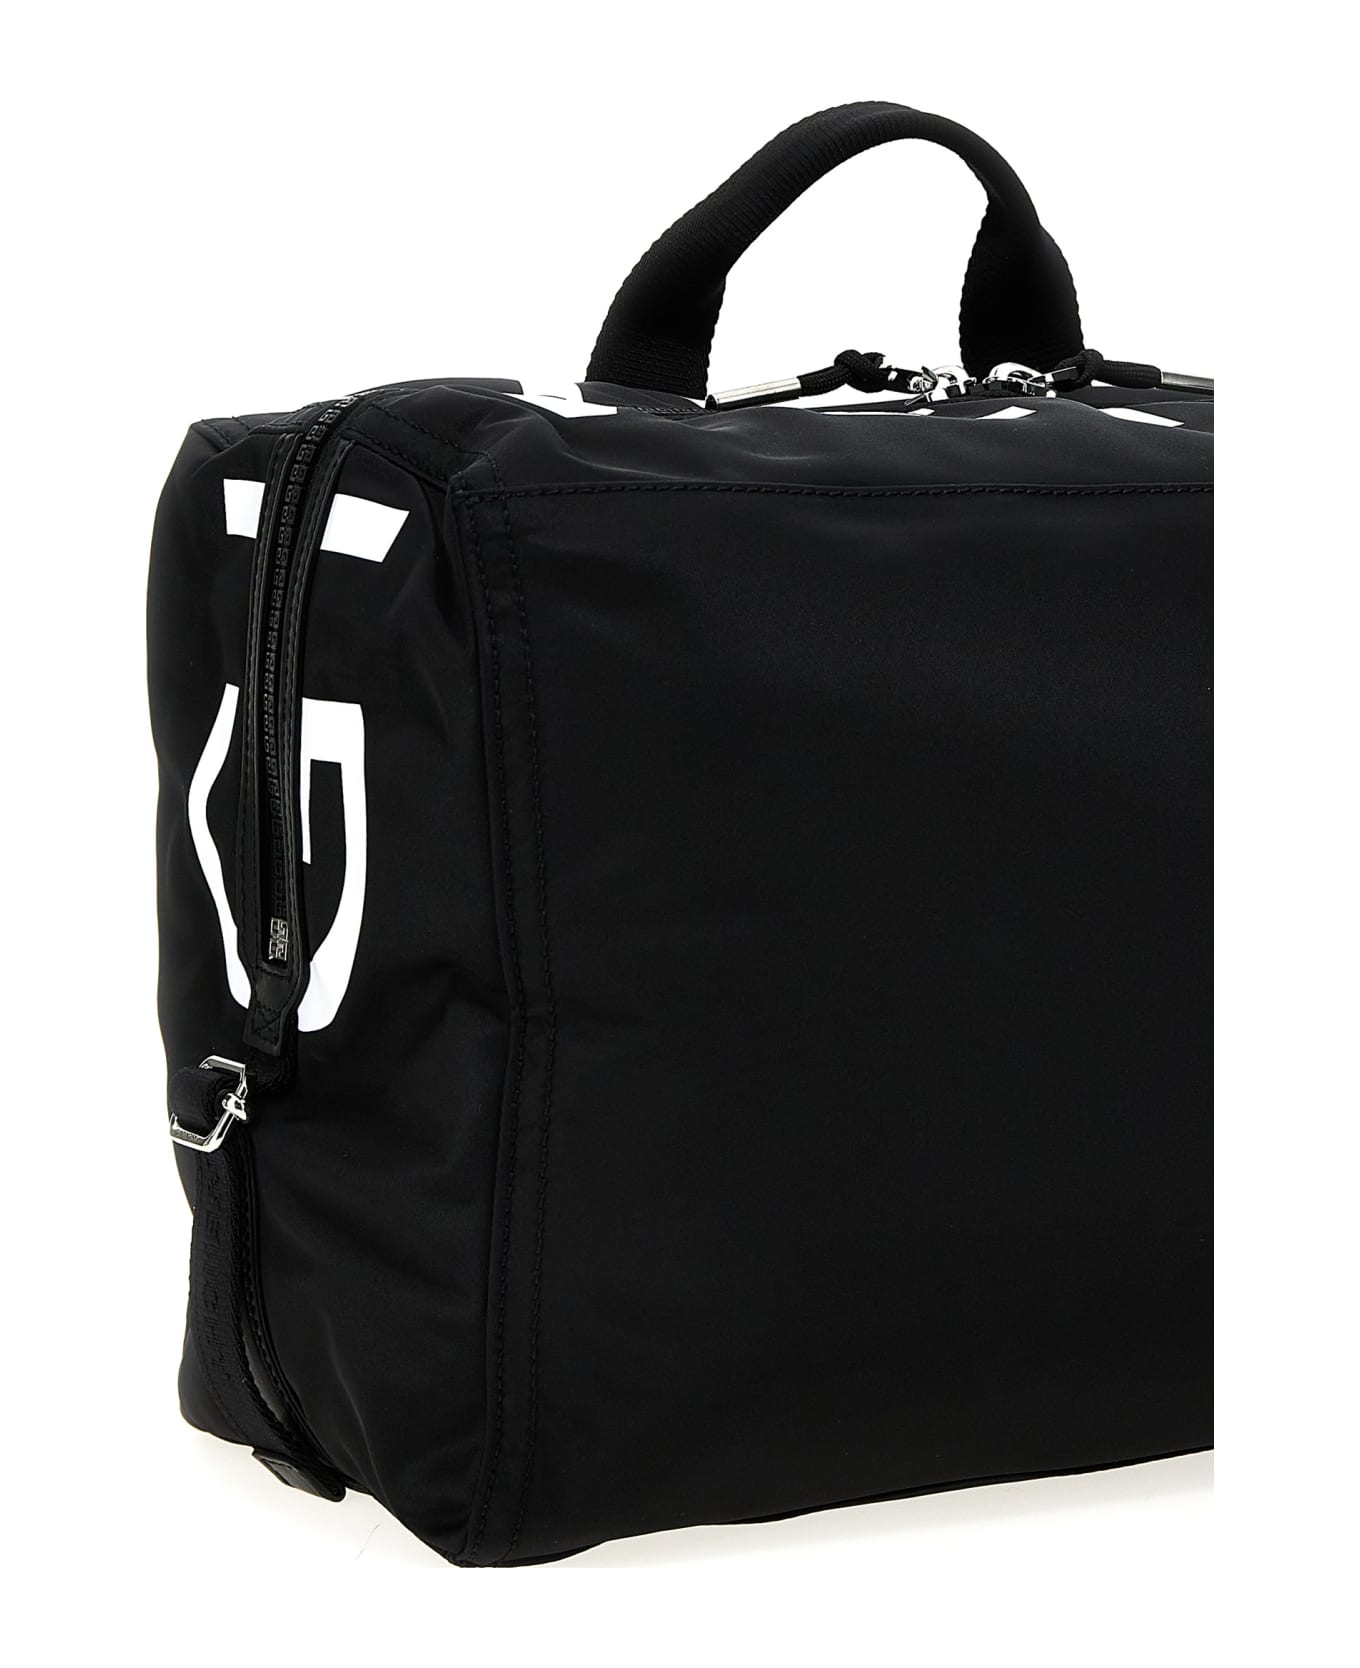 Givenchy Pandora Medium Bag - Black White トラベルバッグ